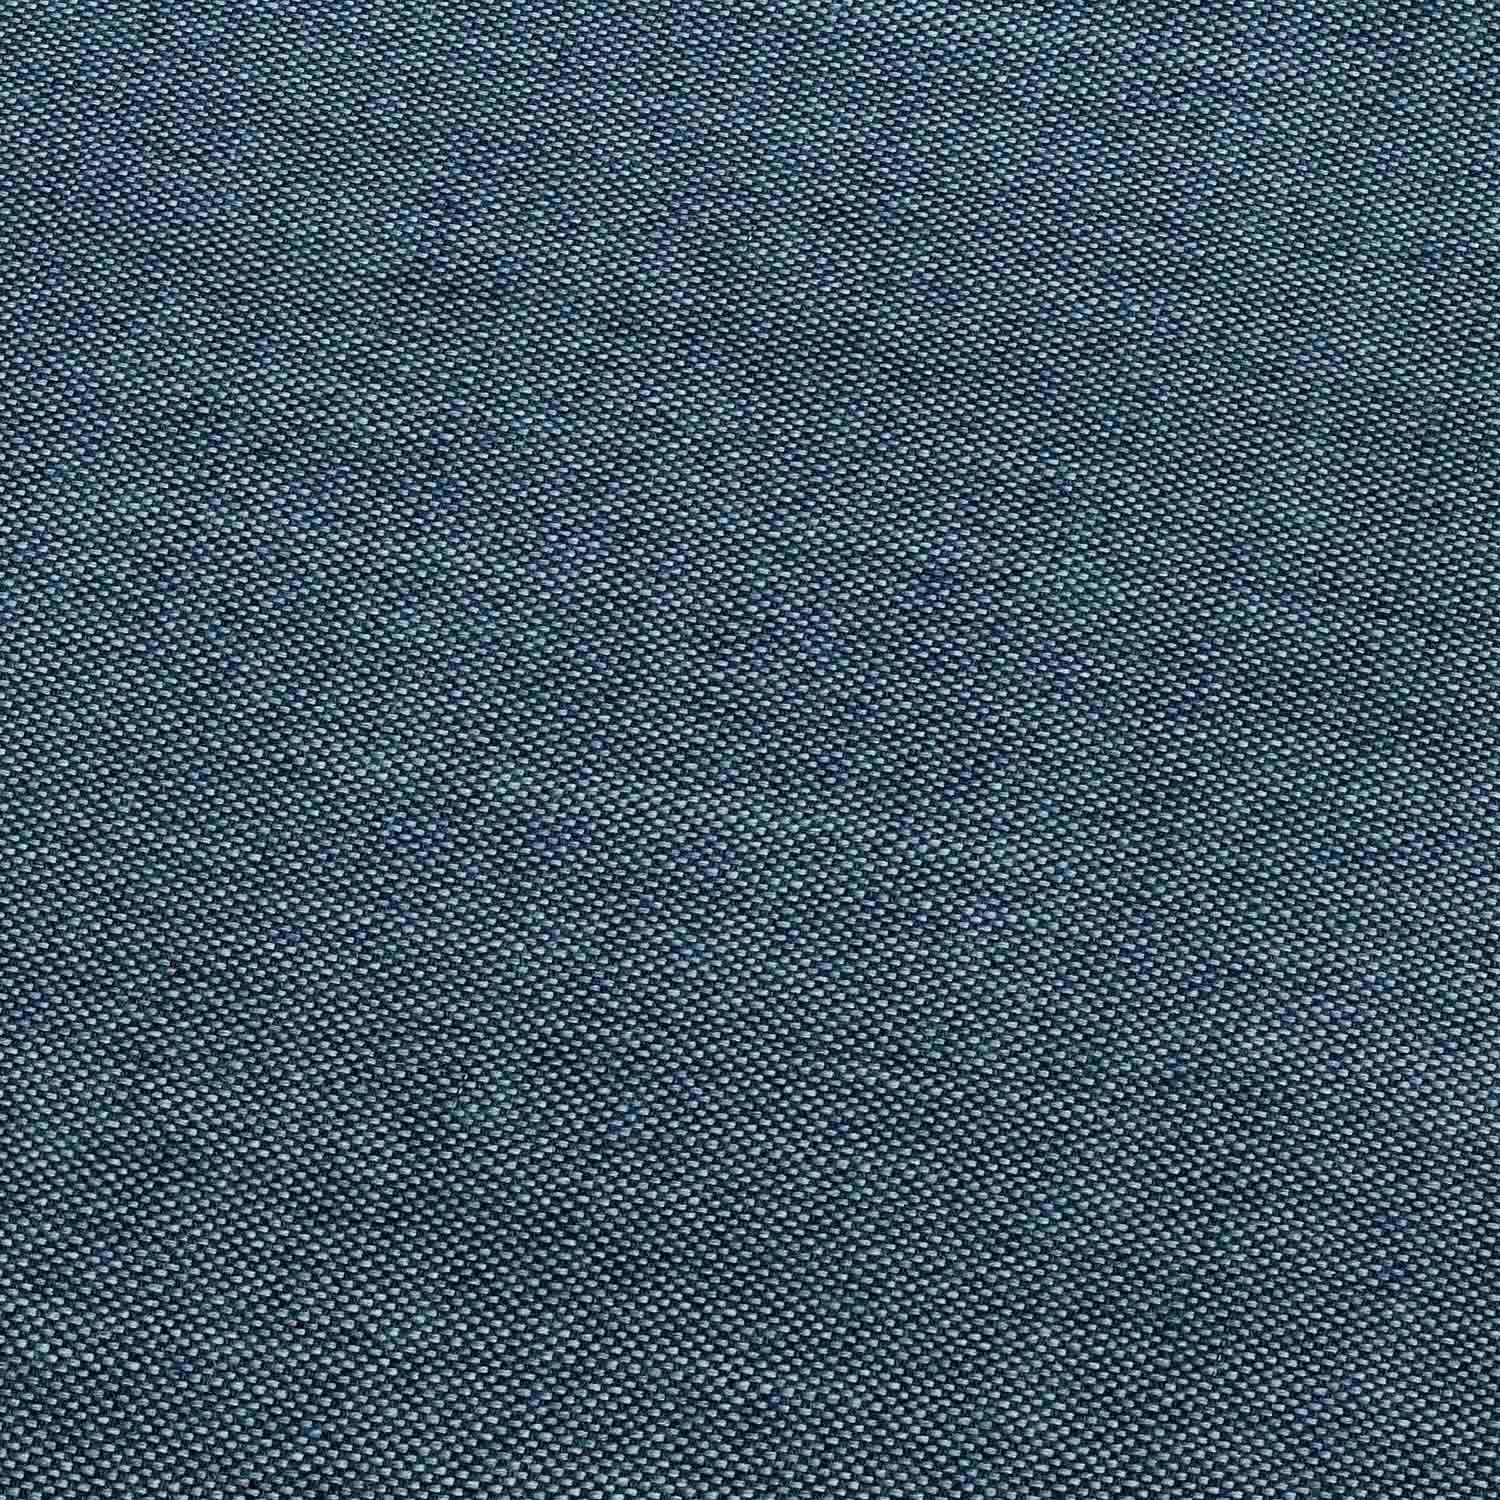 Sofa Seat 84x84 Pique Dark Blue